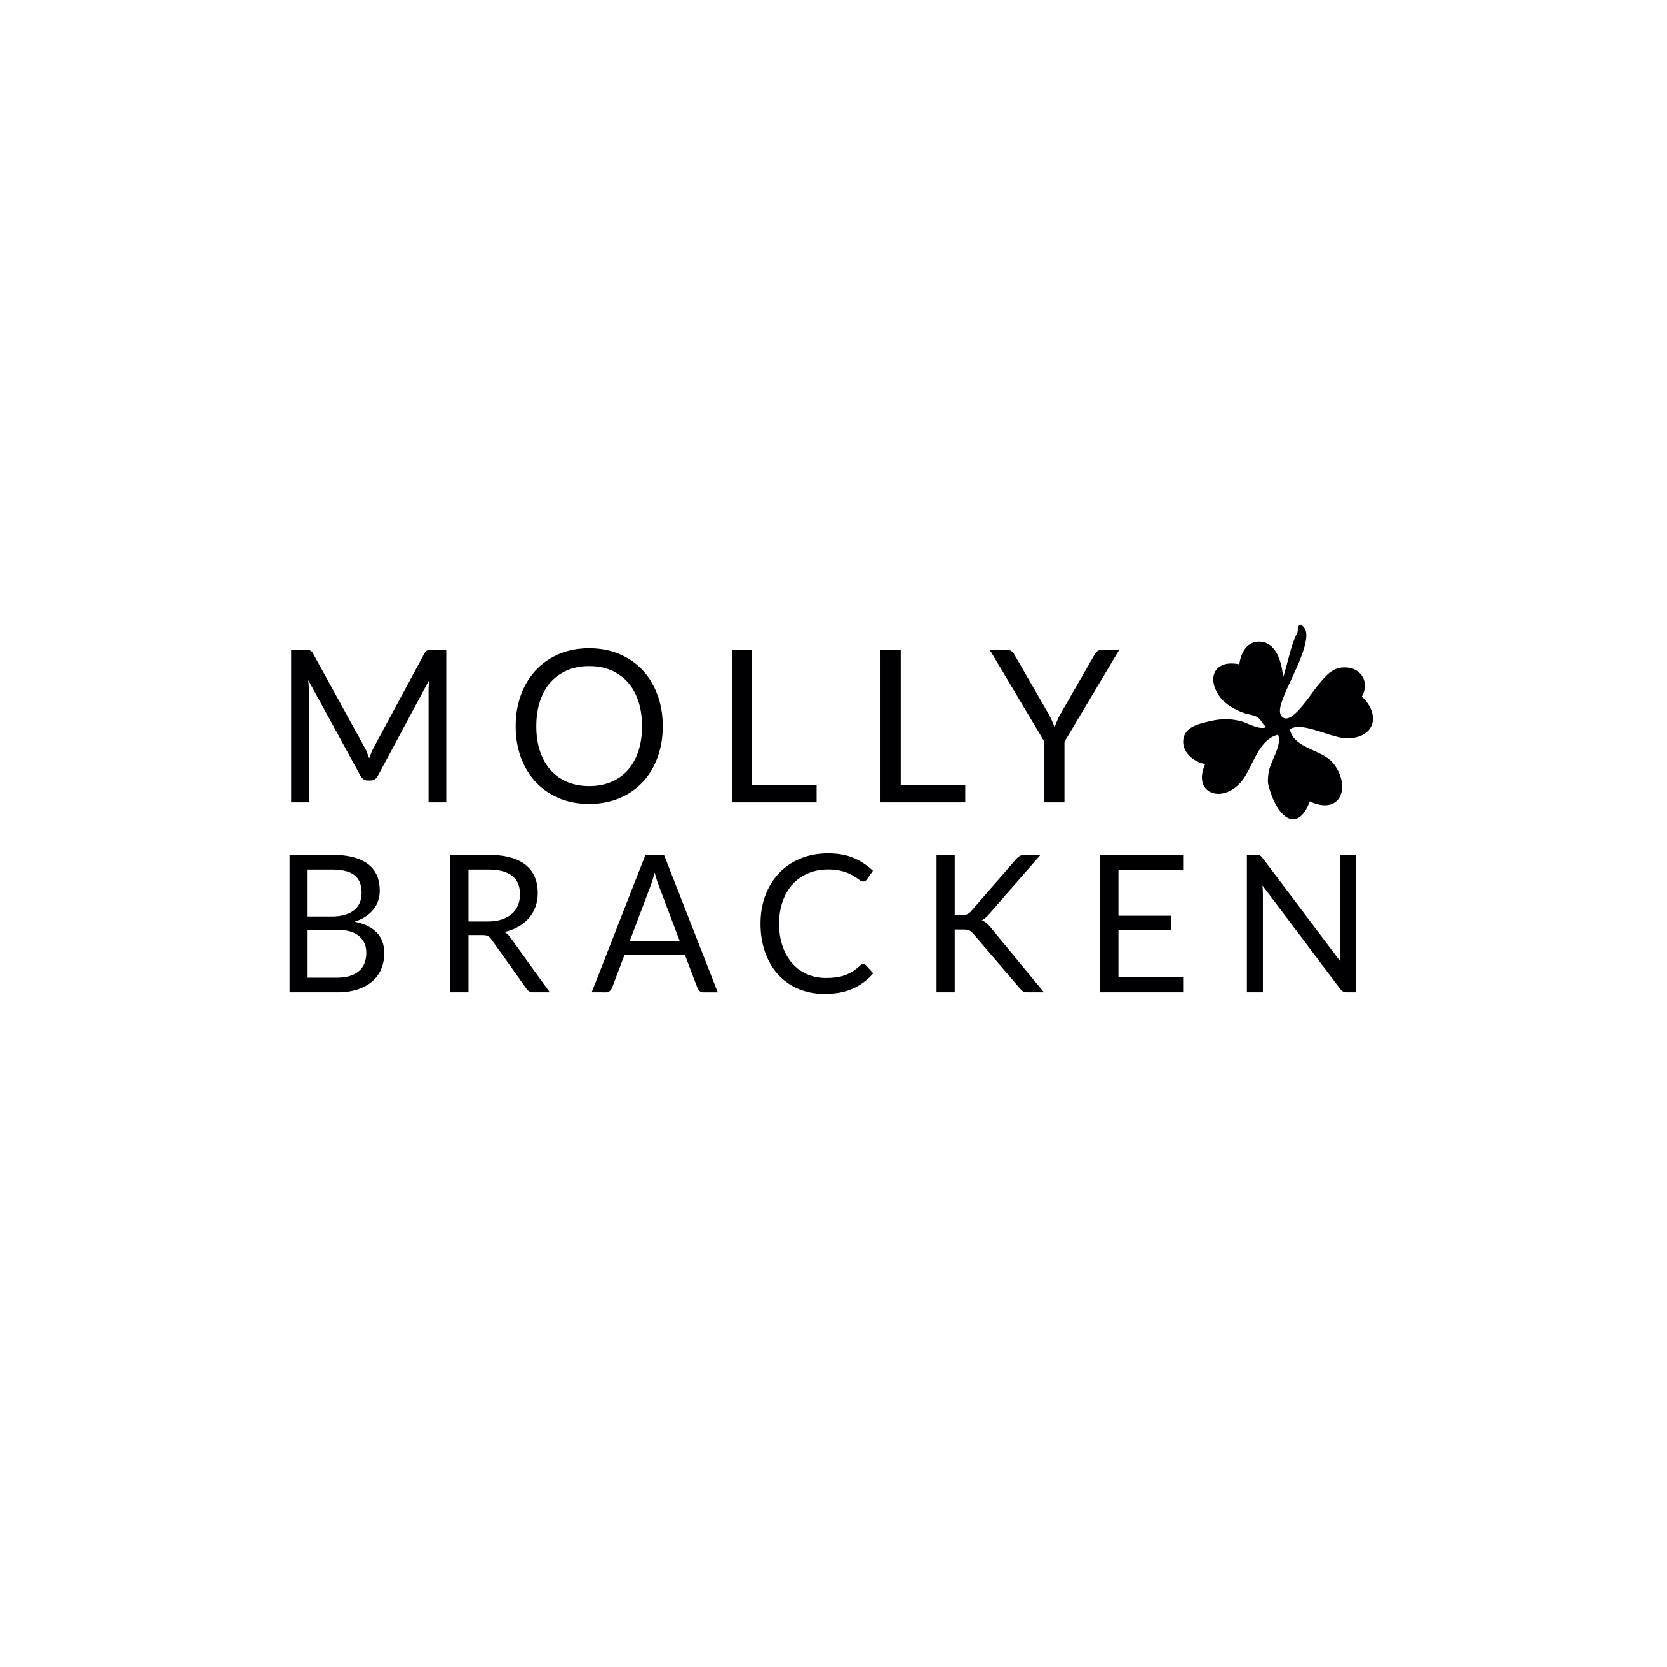 Molly Bracken Розмірні таблиці